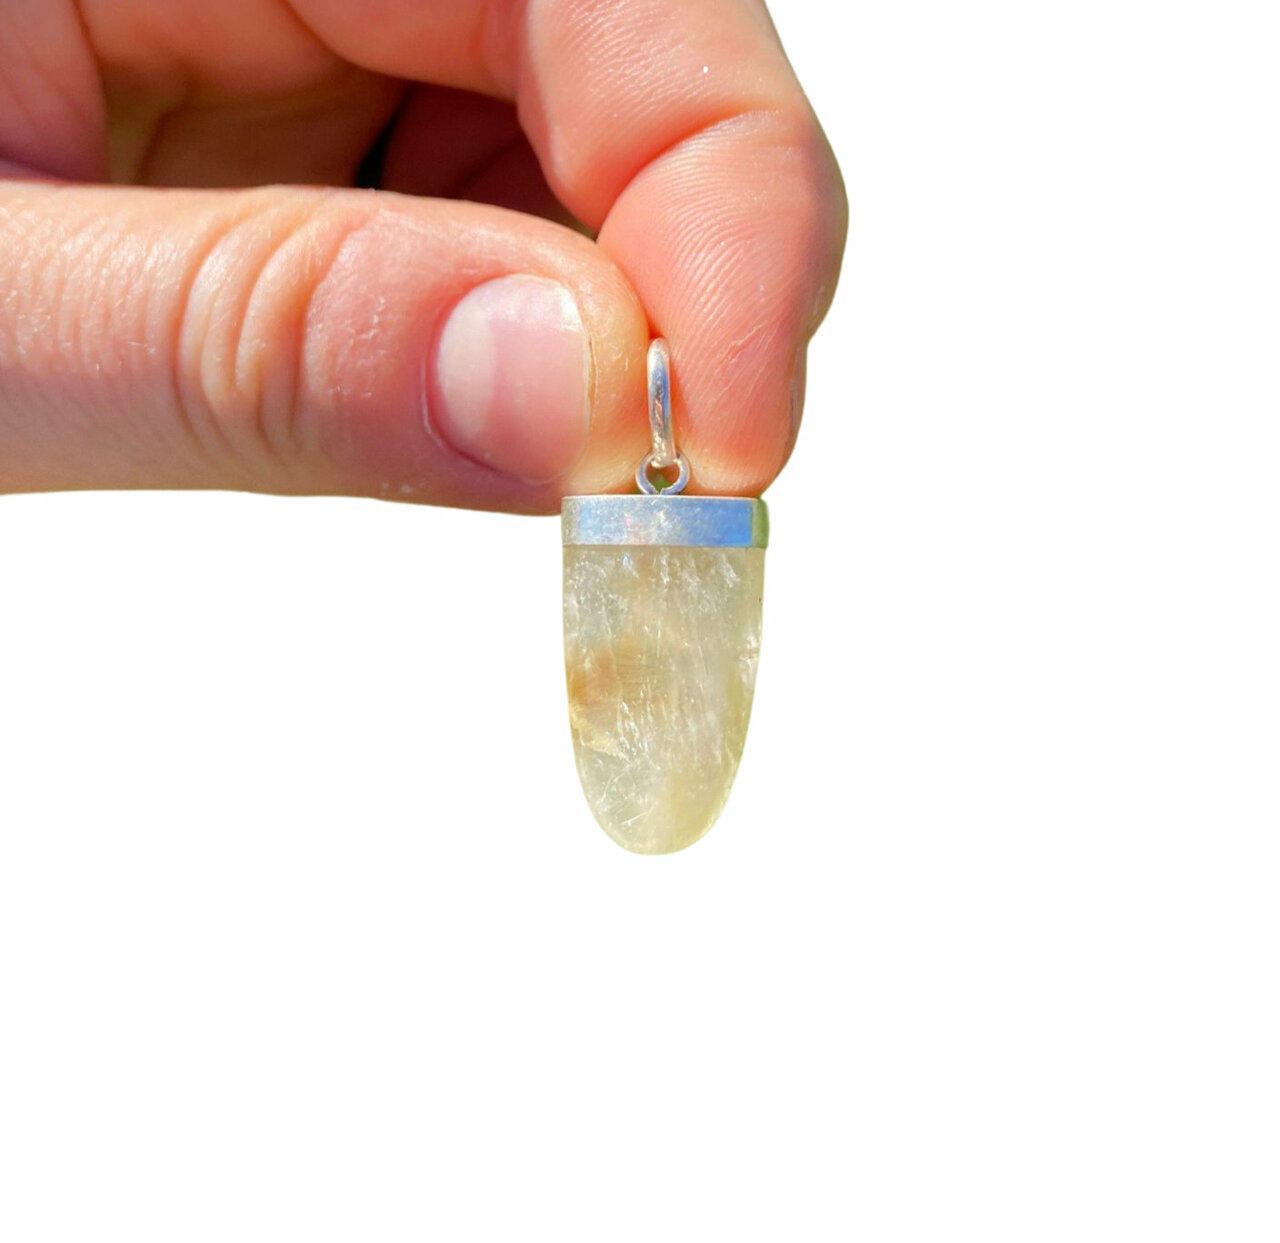 Golden Rutilated Quartz Pendant 07 Gorgeous Natural Healing Crystal Energy Gift Box 